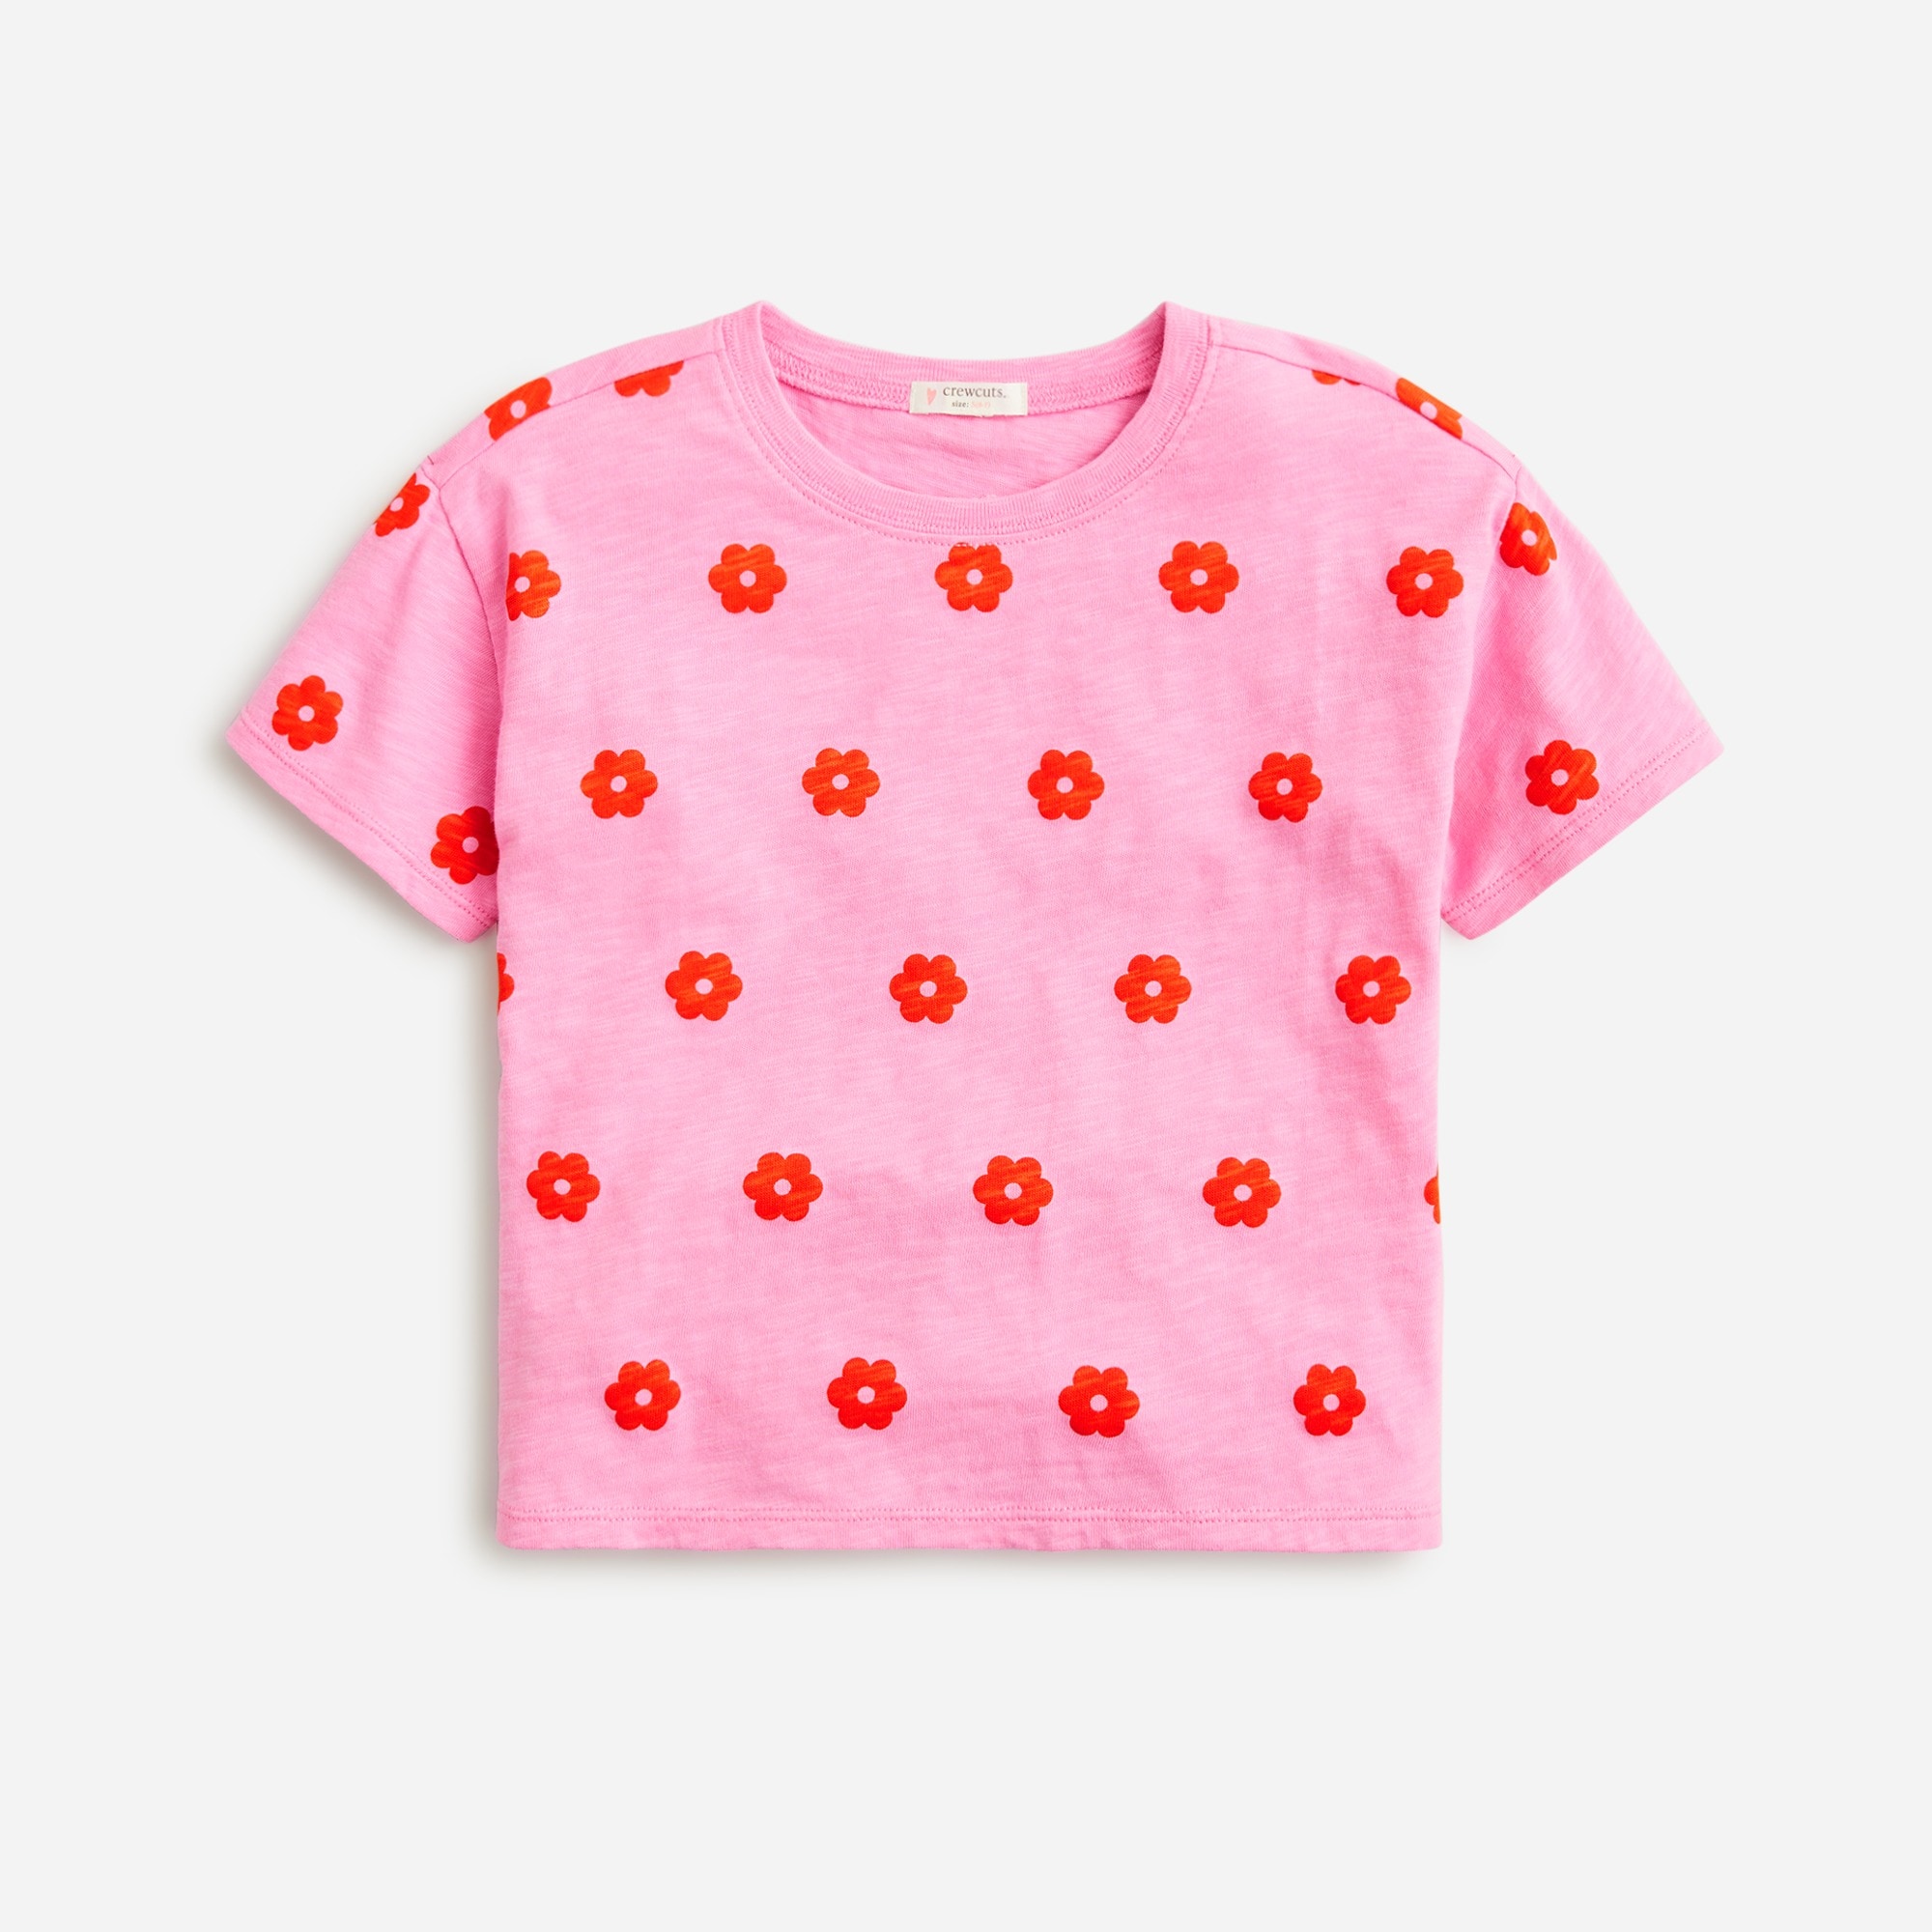  Girls' cropped floral-print T-shirt